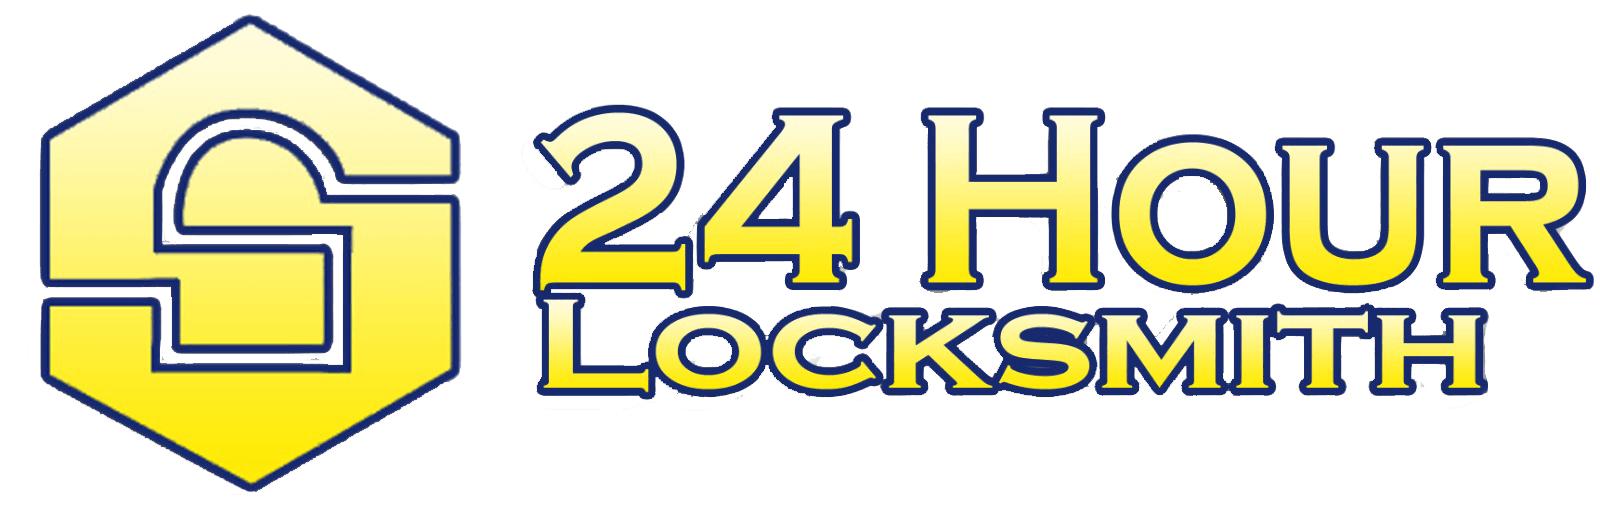 24 Hour Locksmith in Las Vegas, NV